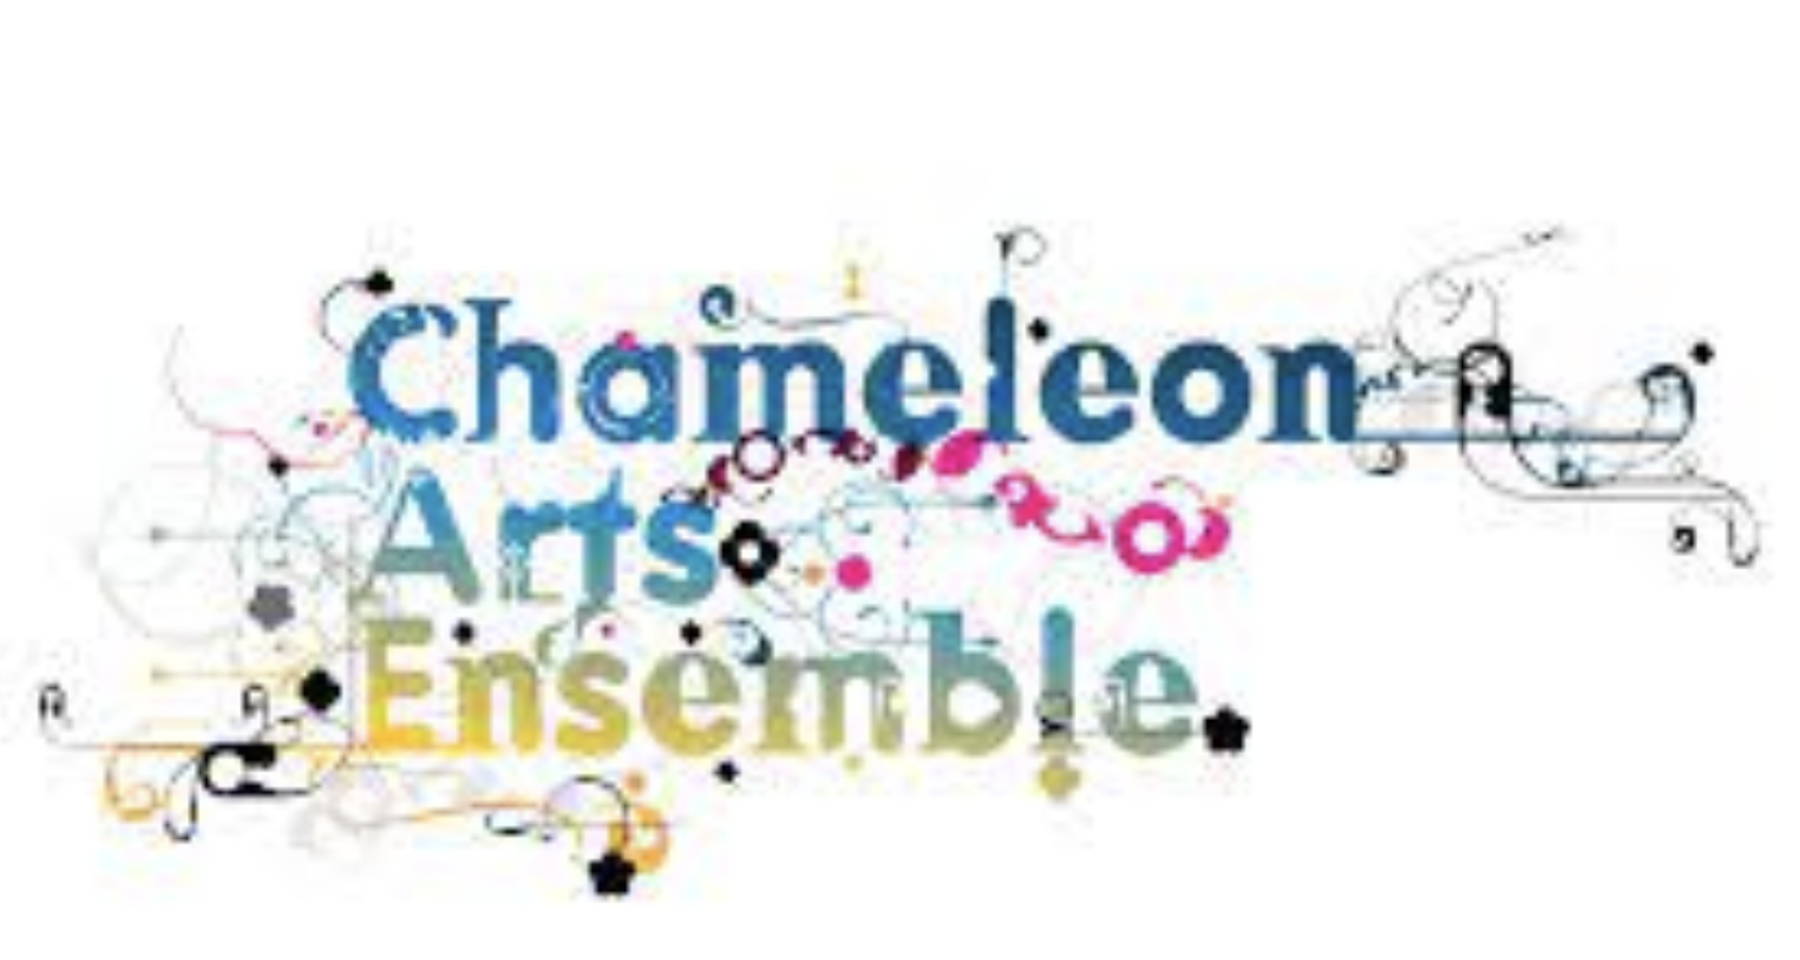 A discounted bundle for Chameleon Arts Ensemble